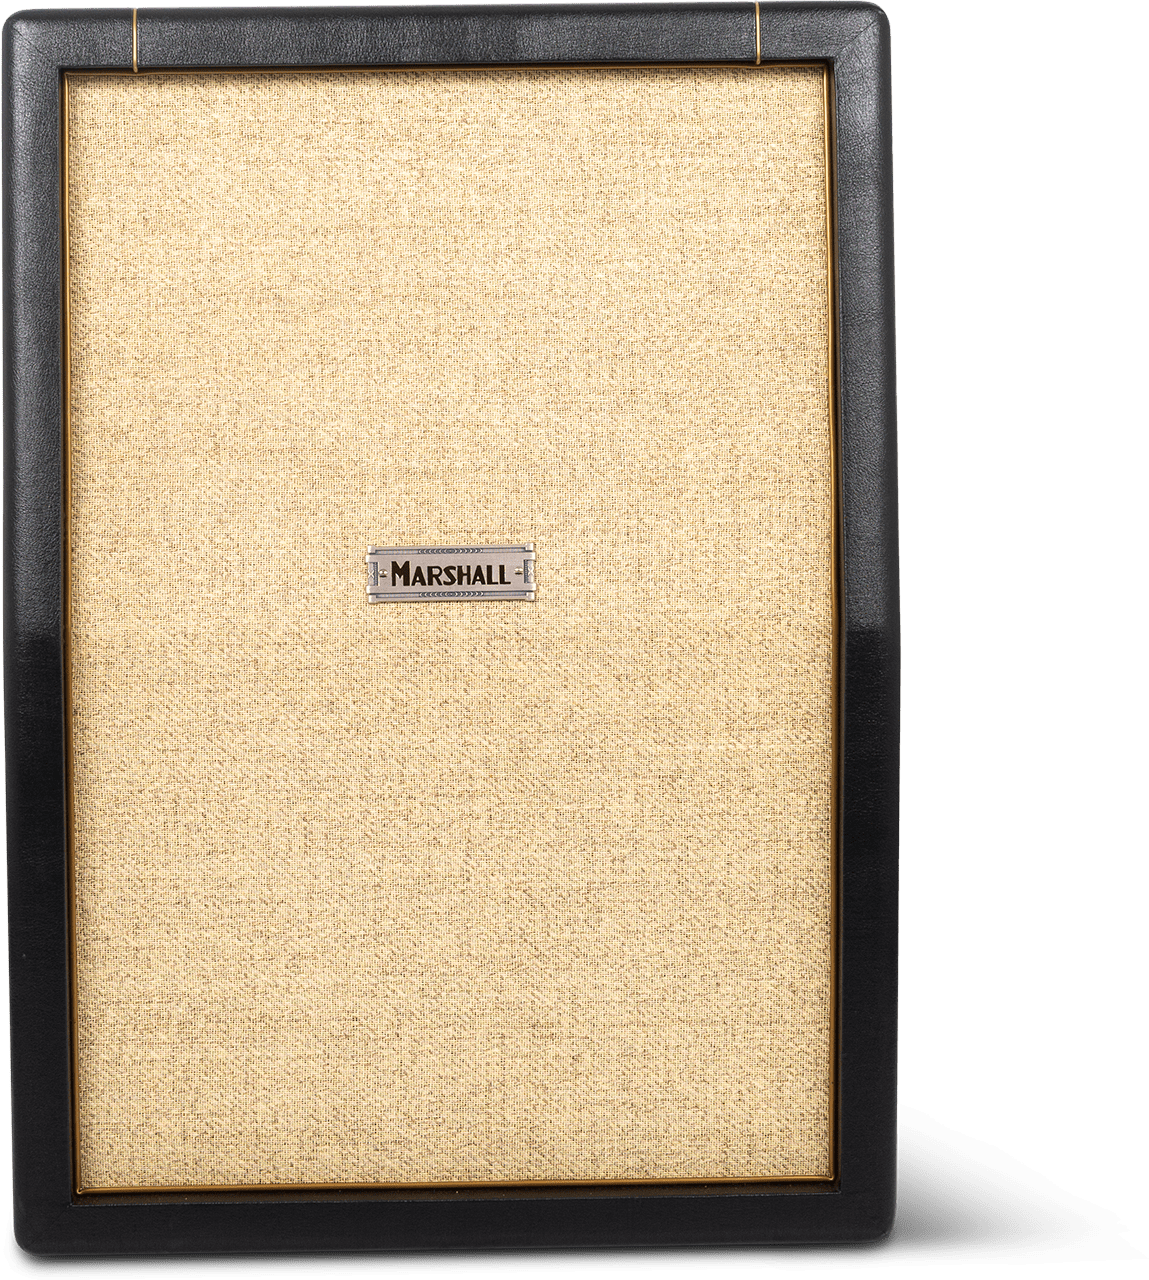 Marshall St212 Studio Cab 130w 2x12 - Elektrische gitaar speakerkast - Main picture